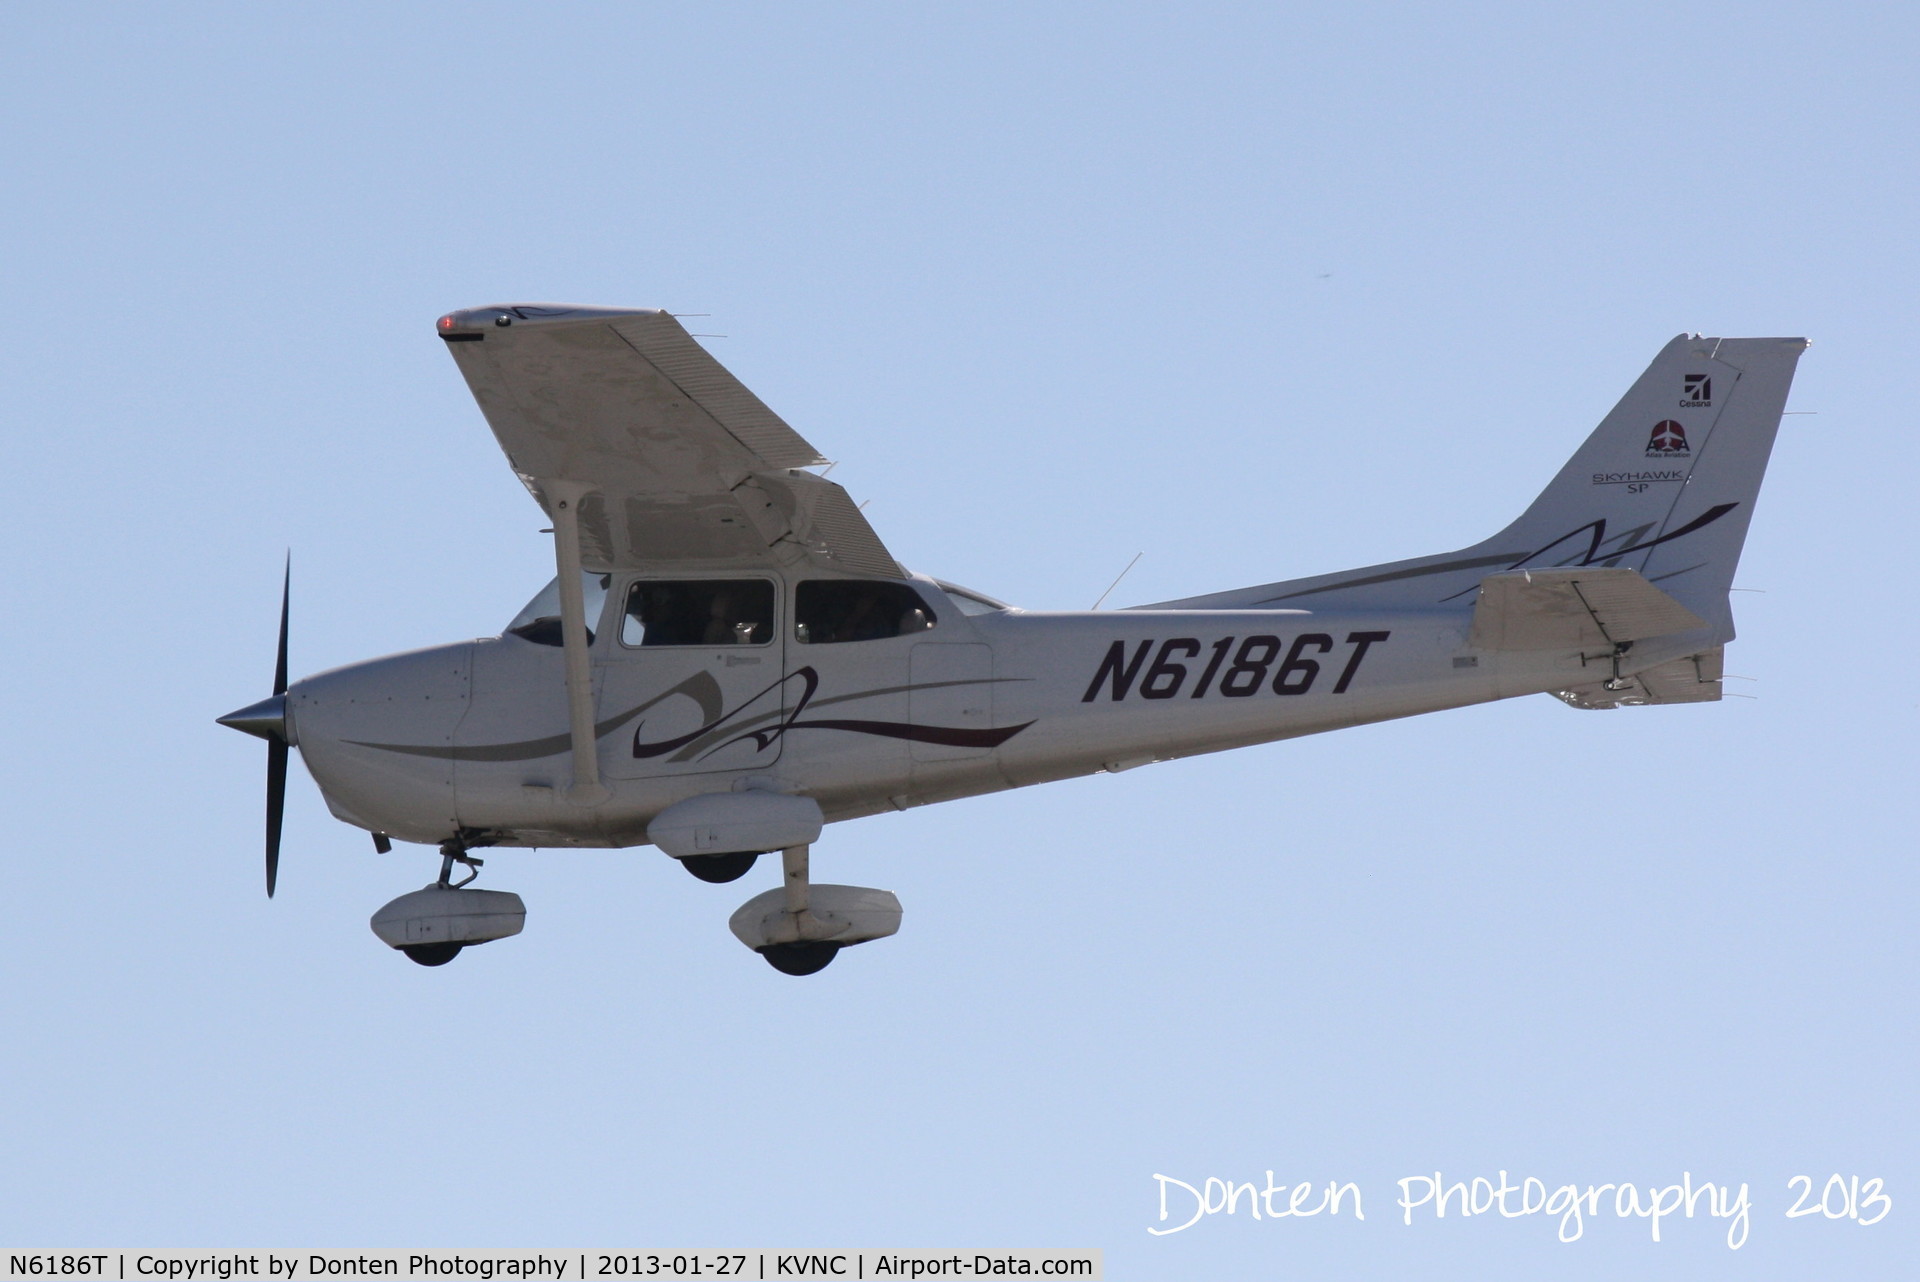 N6186T, 2008 Cessna 172S C/N 172S10729, Cessna Skyhawk (N6186T) flies over Brohard Beach on approach to Runway 5 at Venice Municipal Airport